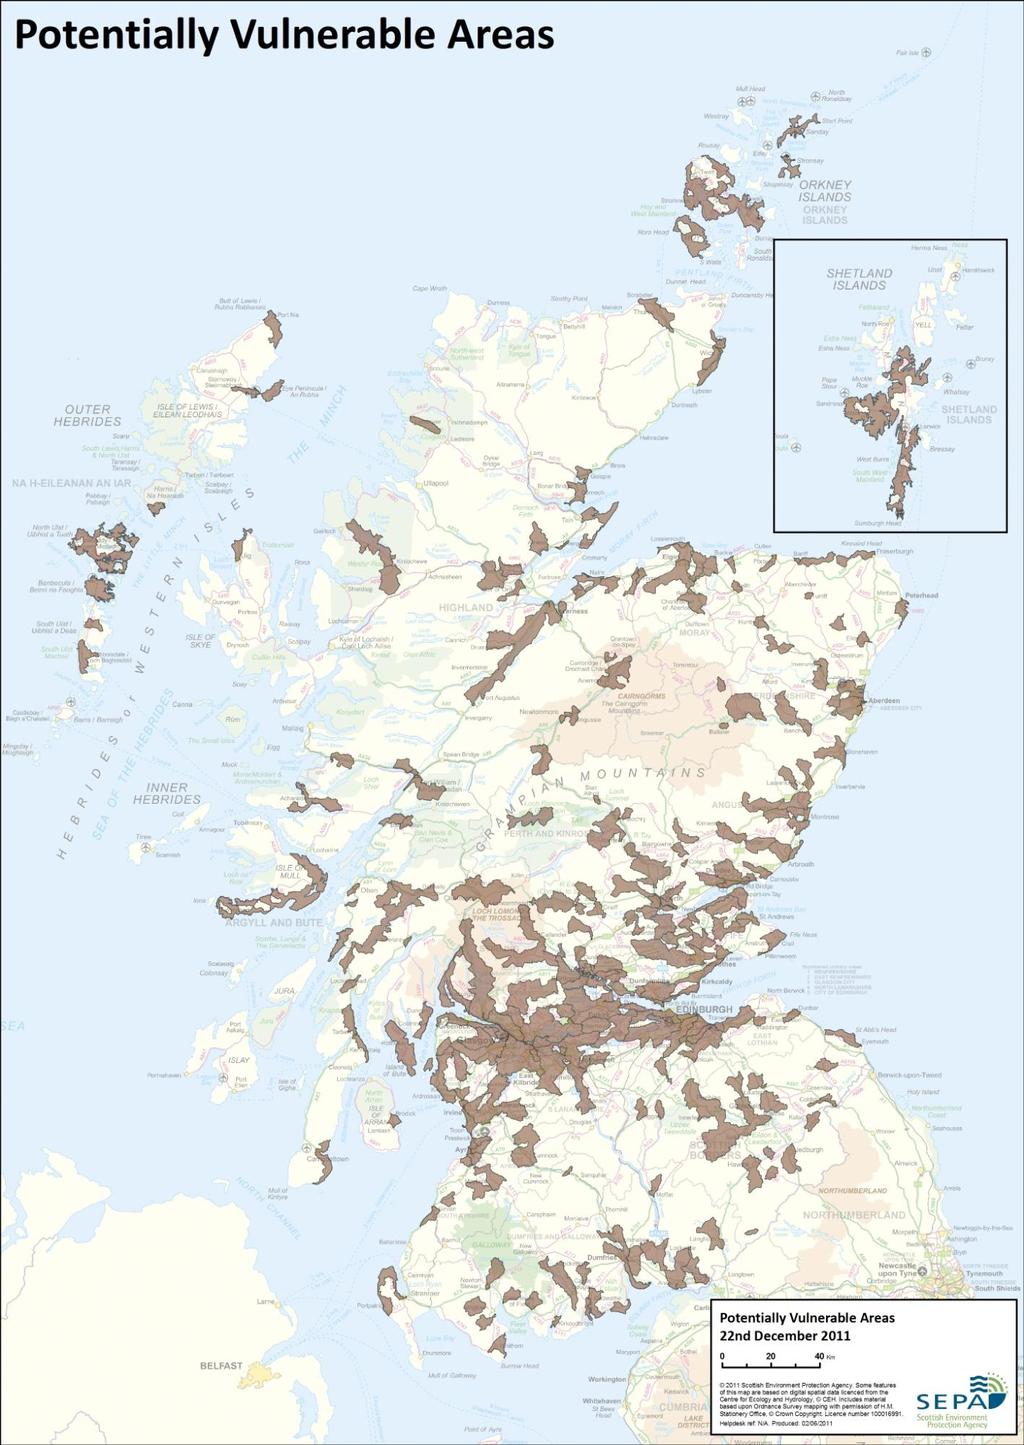 Figure 1: A map of Scotland